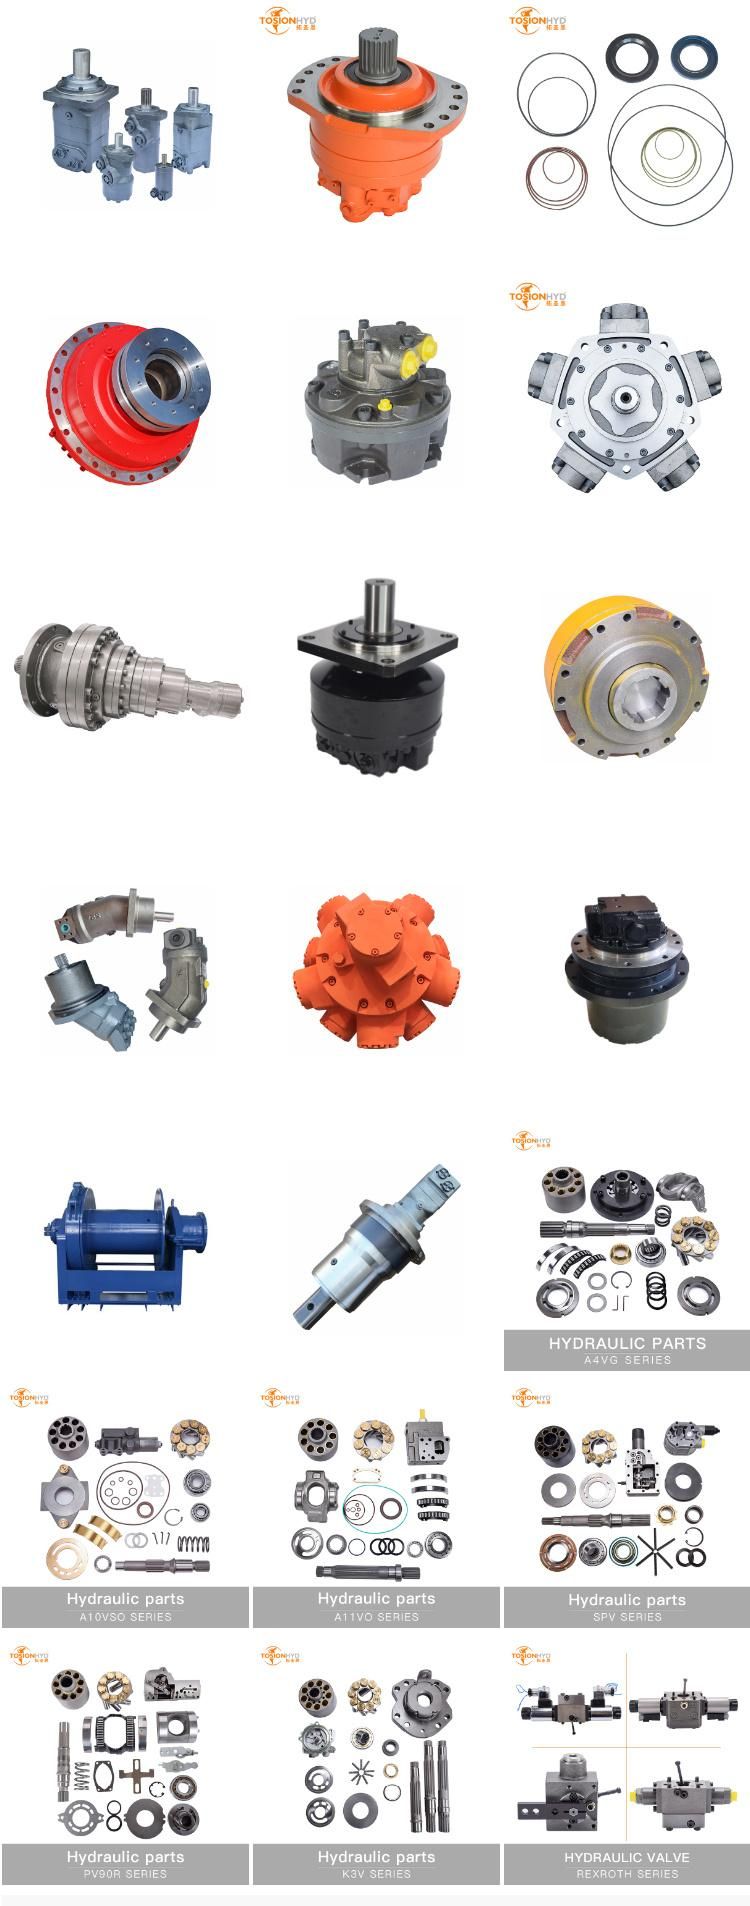 A7V55 A7V80 Hydraulic Pump Parts with Rexroth Spare Repair Kits